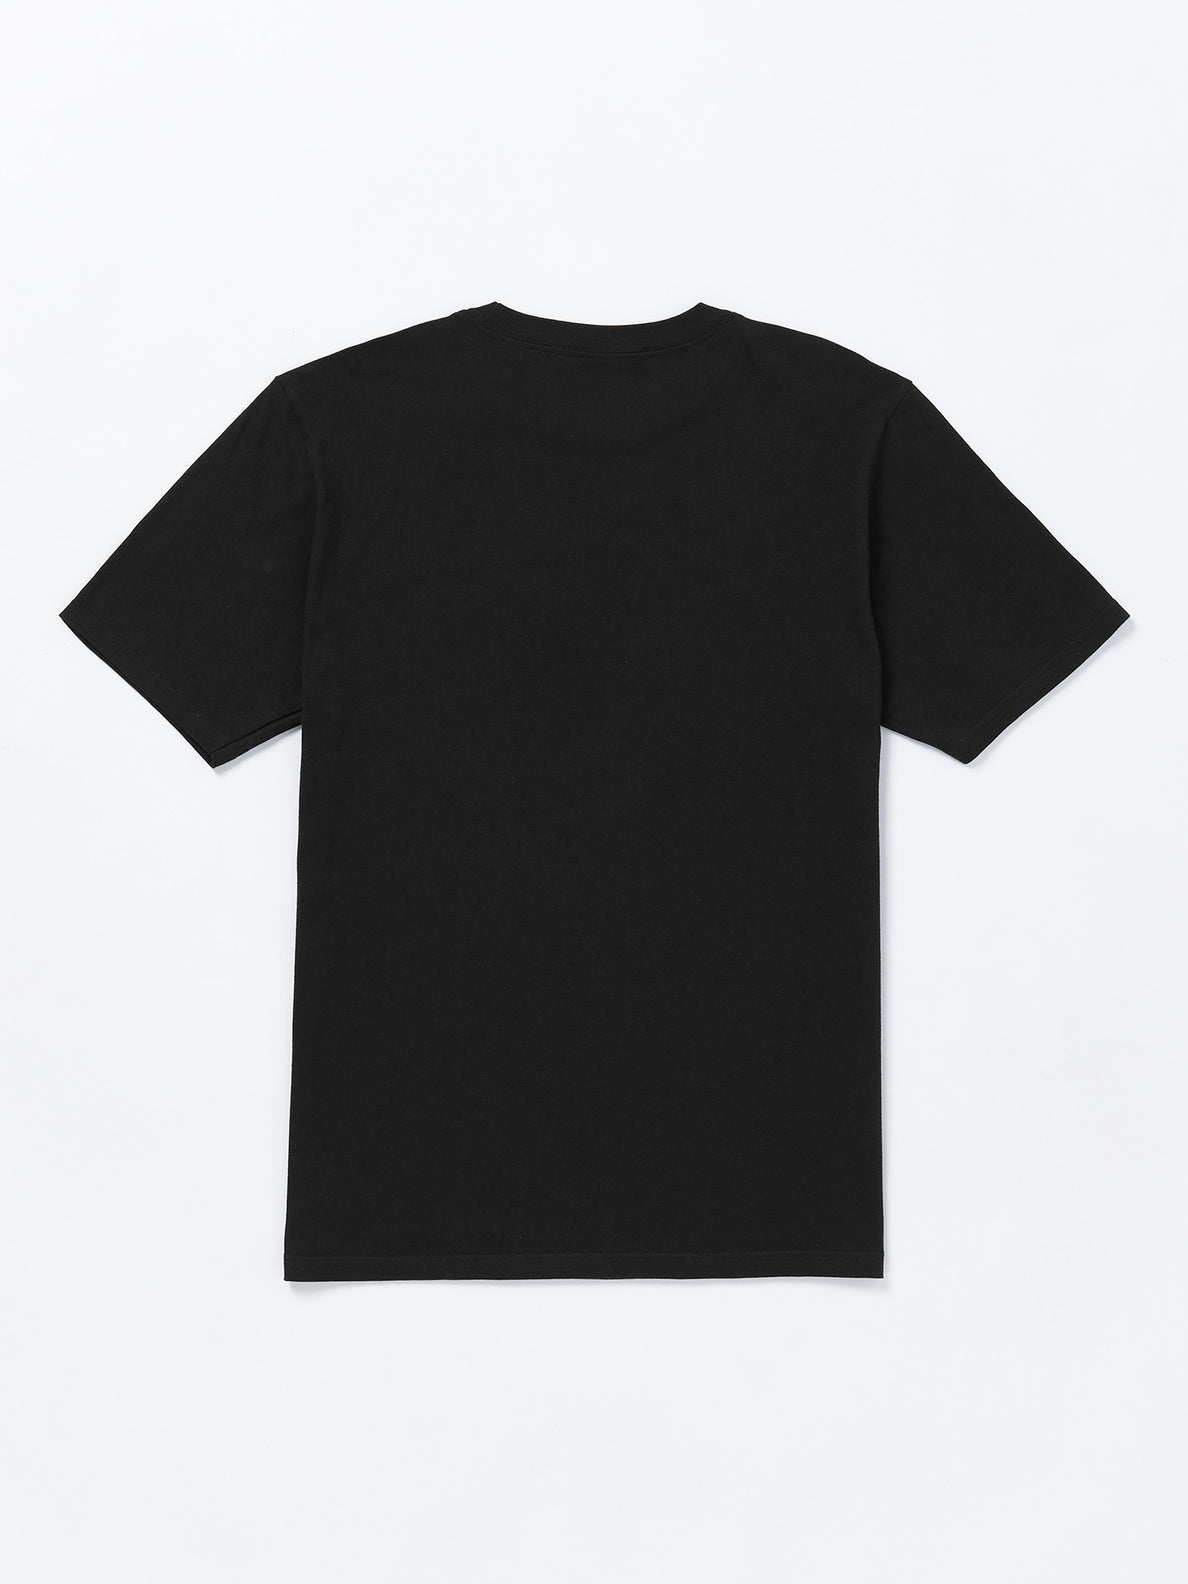 Volcom Thundertaker Short Sleeve T-Shirt - Black